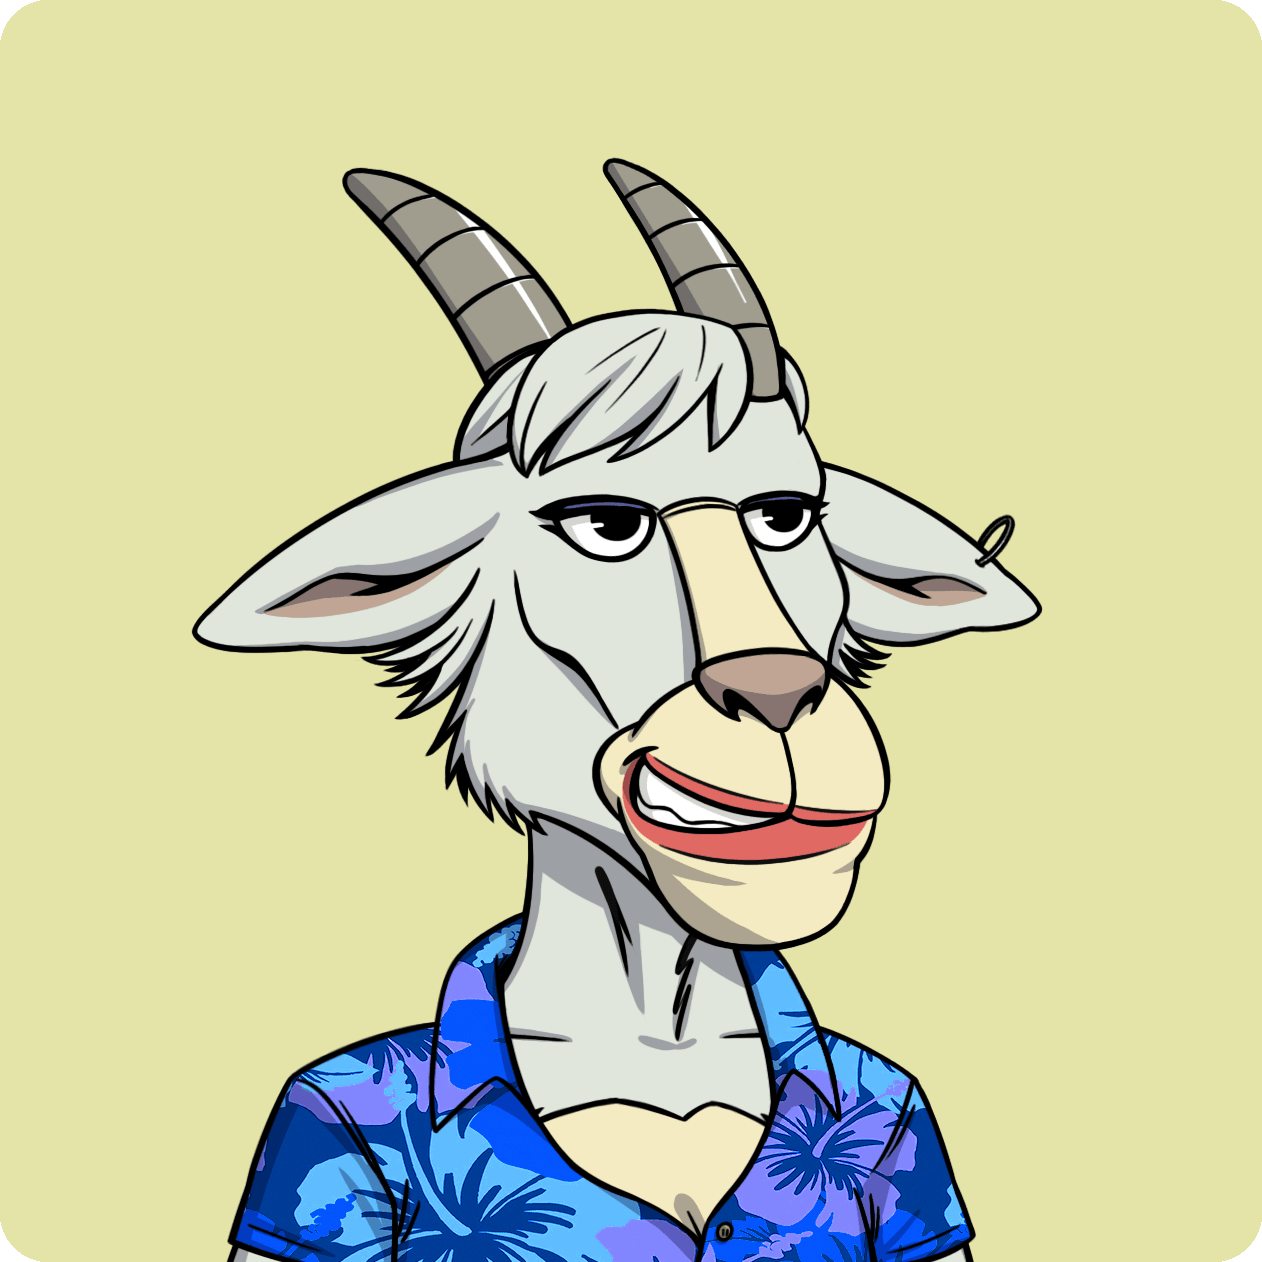 Goat #58